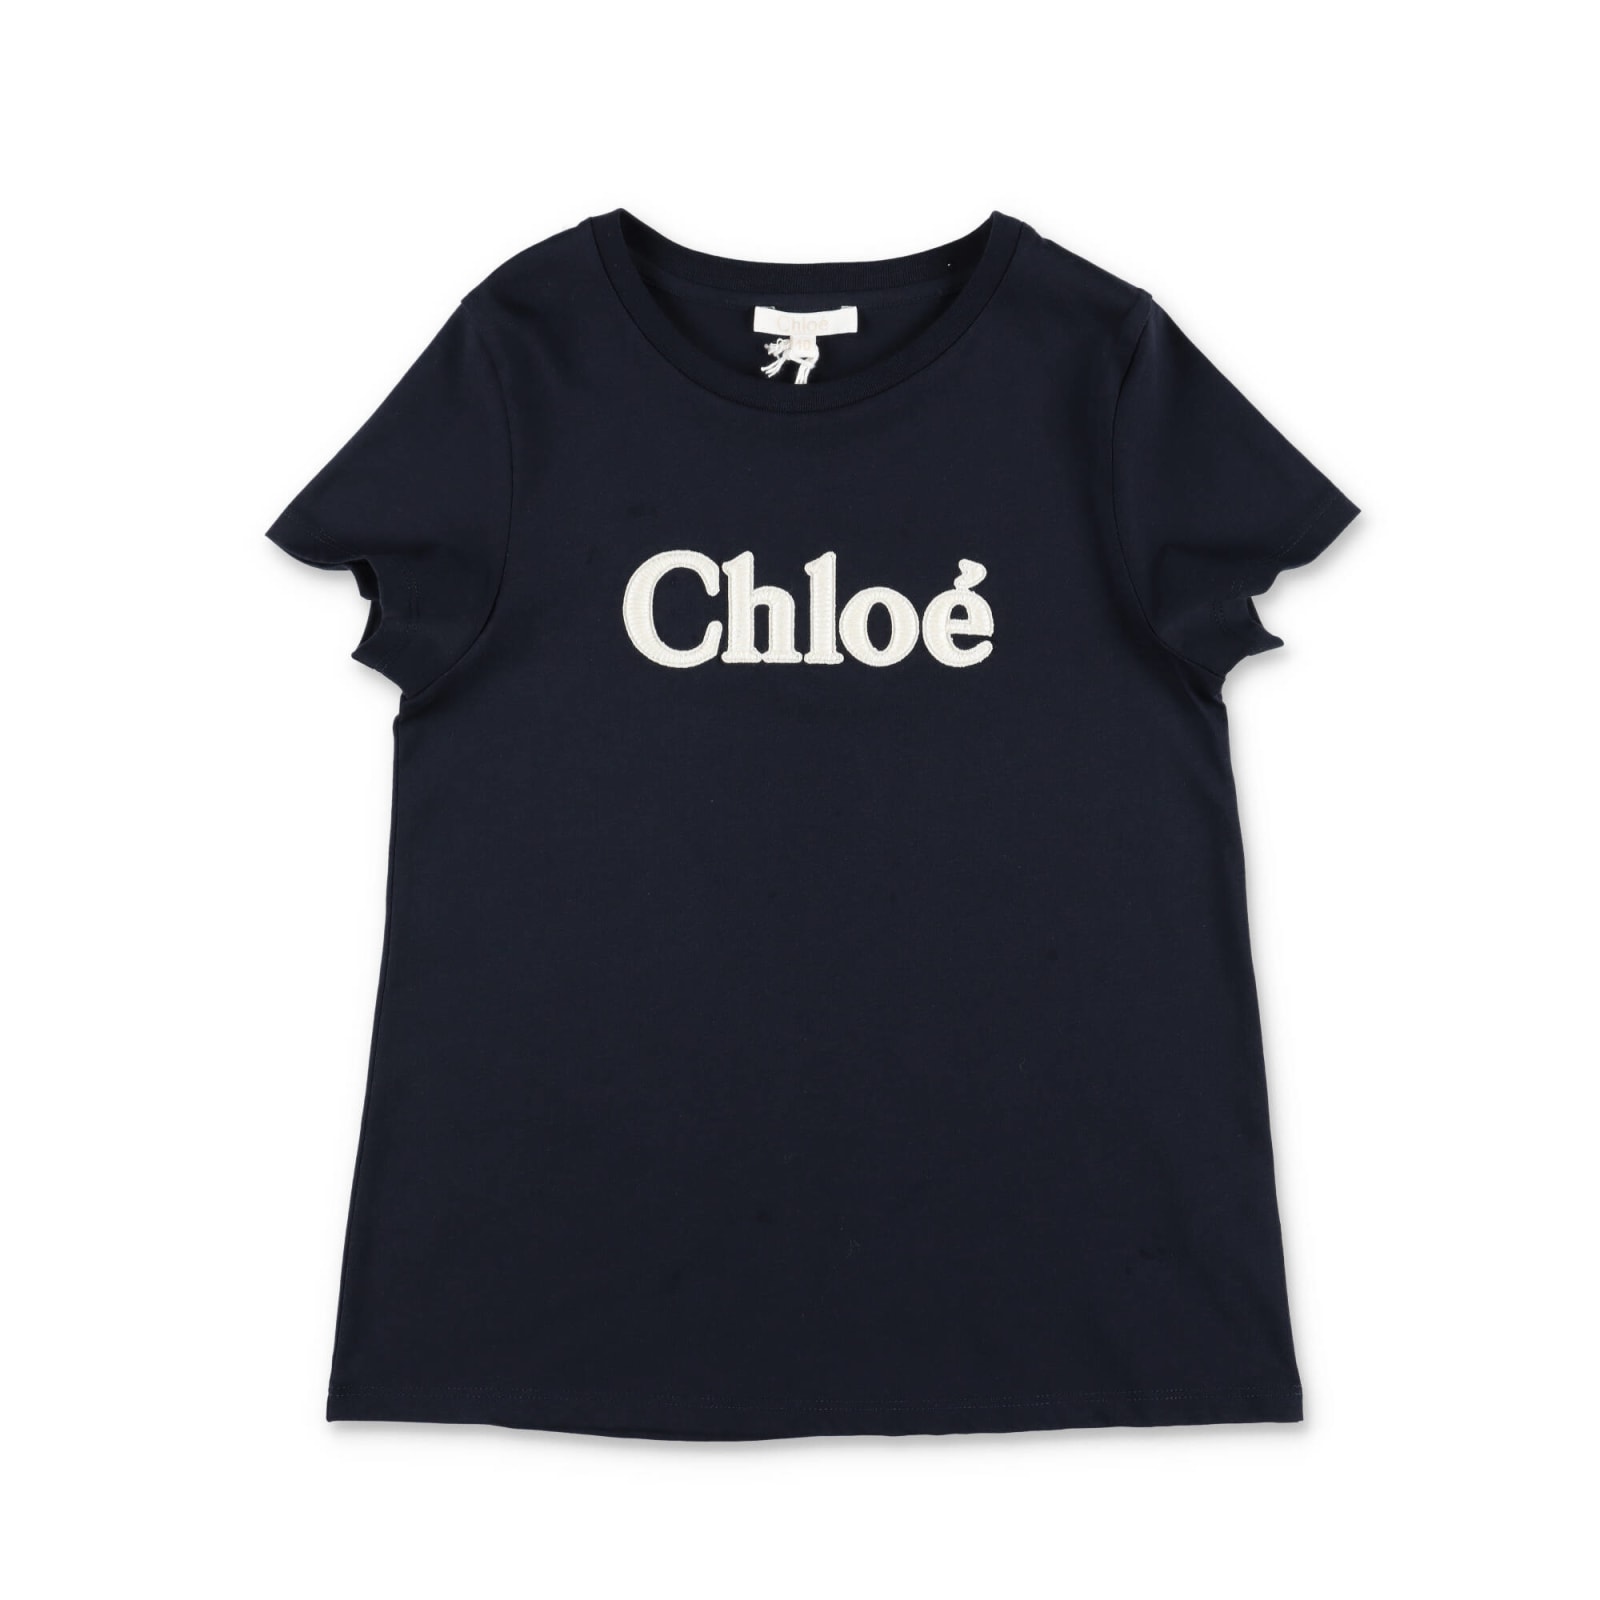 Chloé Chloe T-shirt Blu Navy In Jersey Di Cotone Bambina